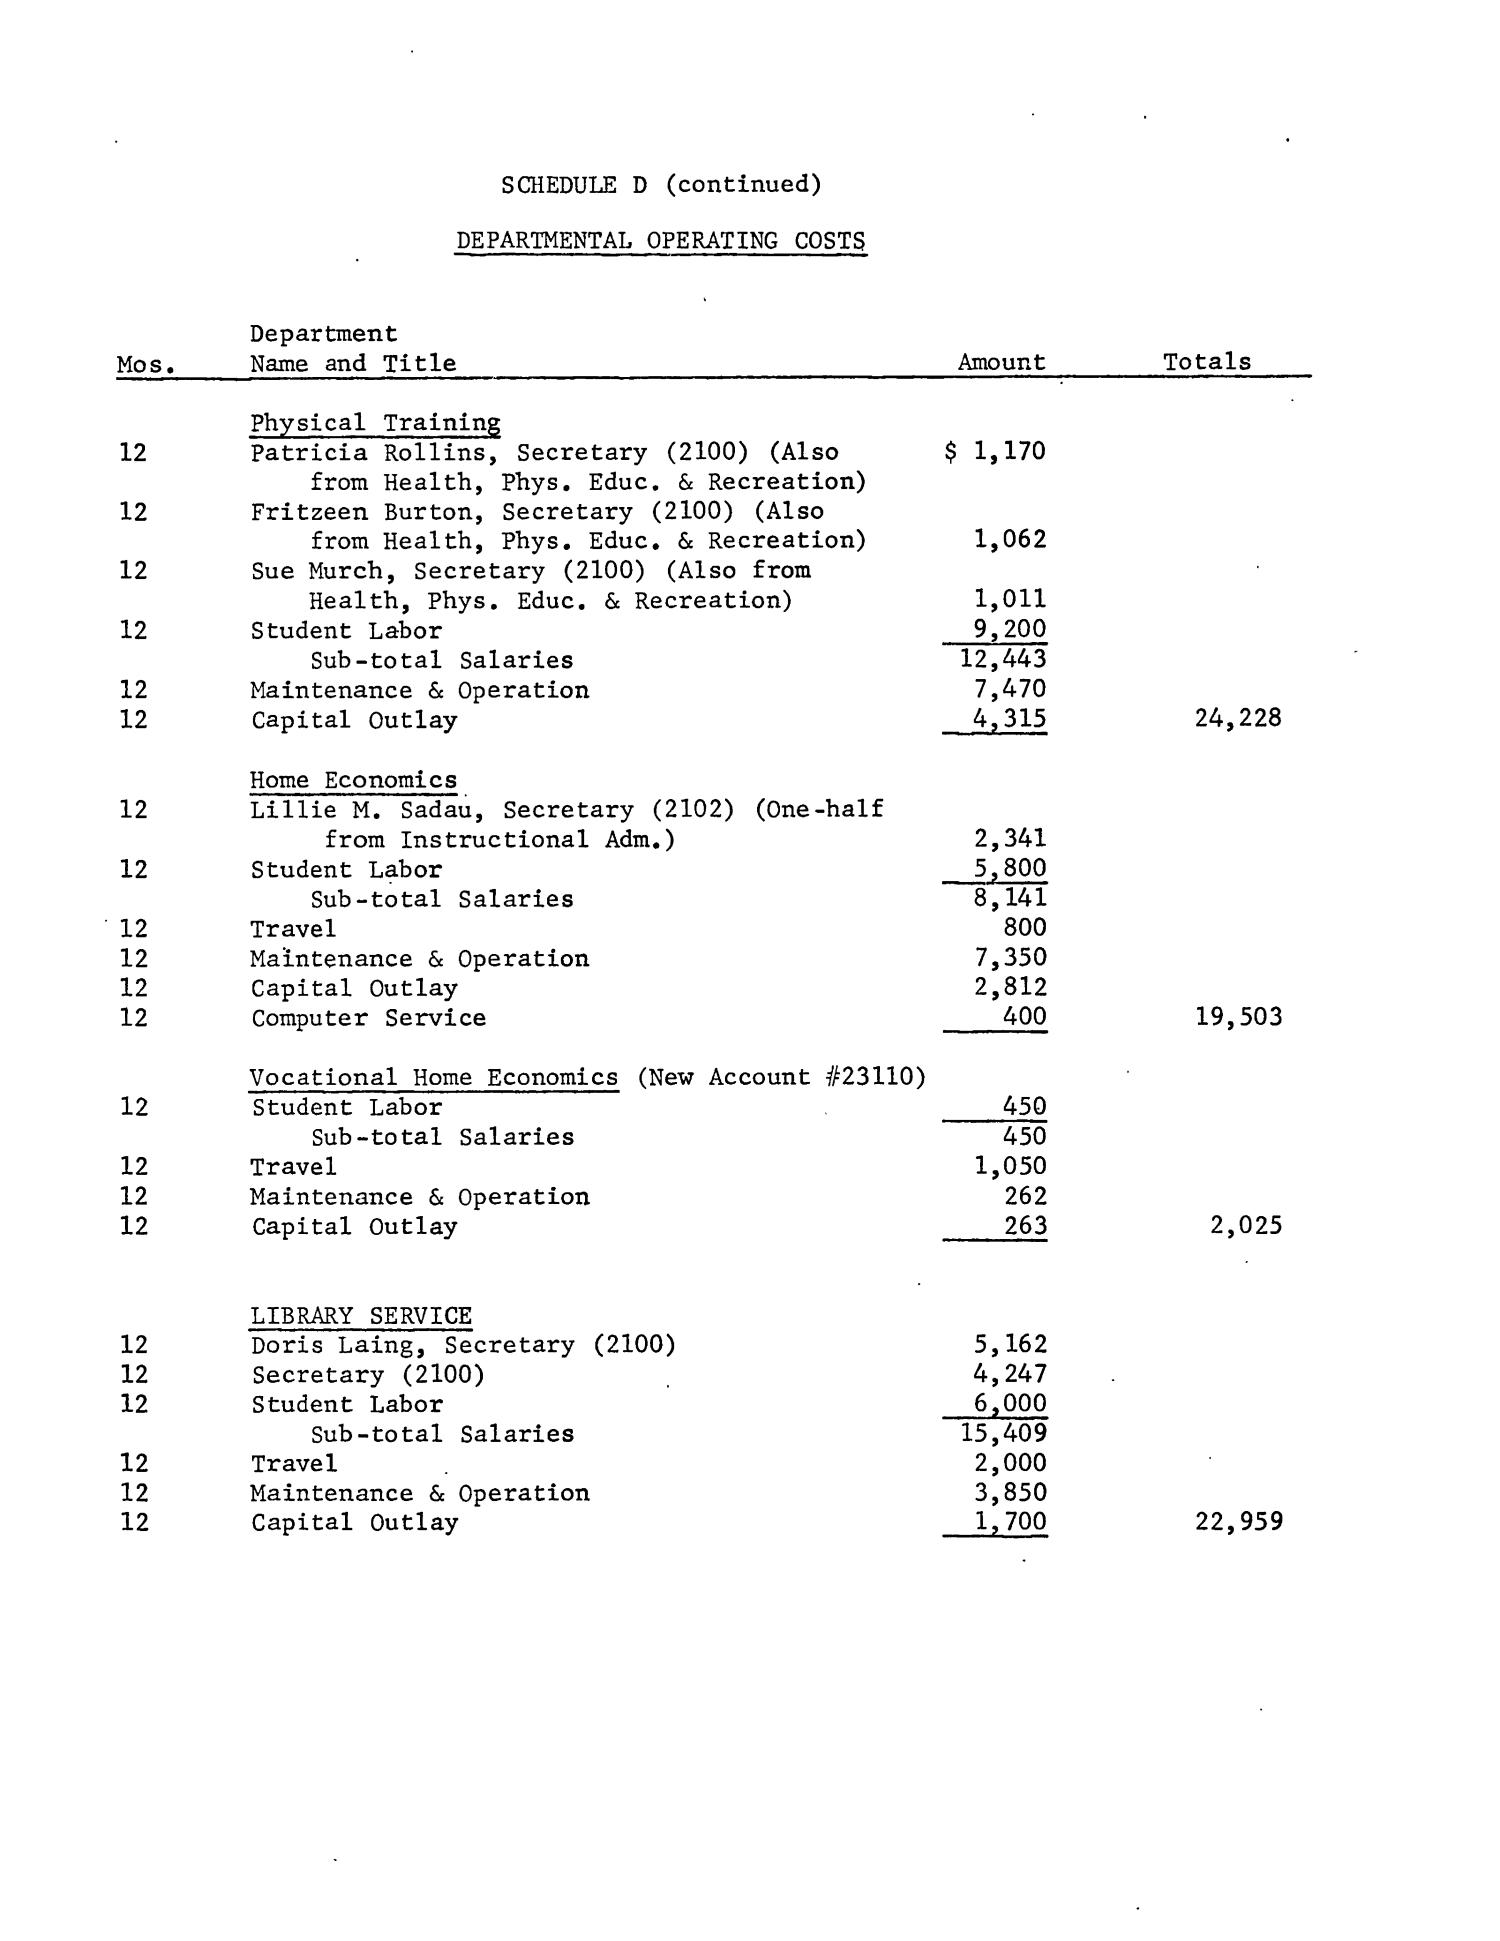 North Texas State University Budget: 1971-1972
                                                
                                                    75
                                                